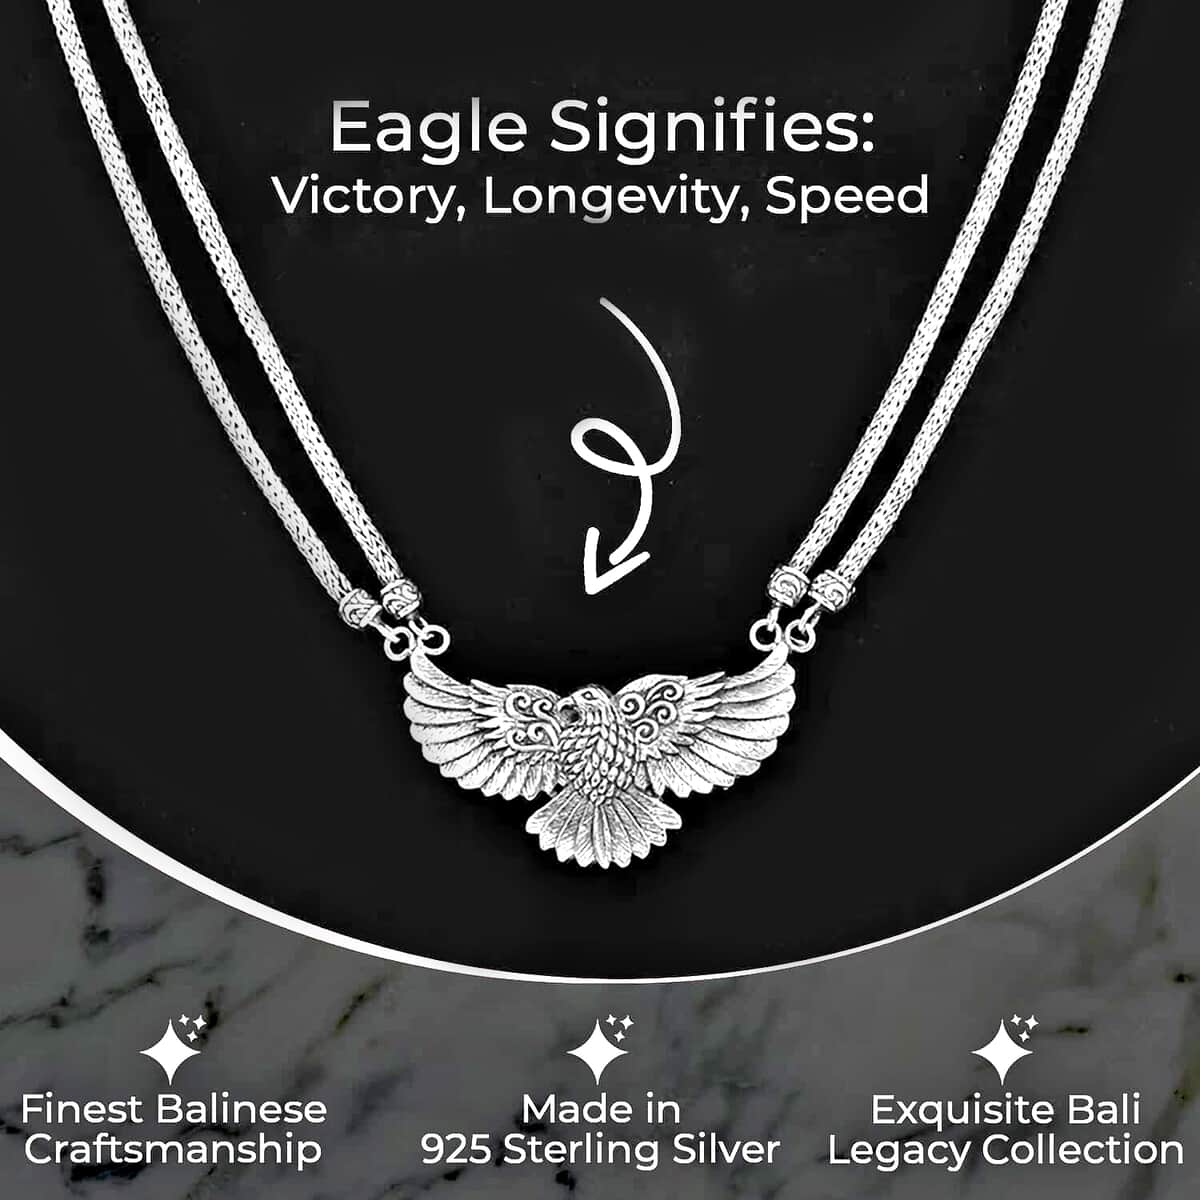 Bali Legacy Eagle Necklace, Sterling Silver Necklace, Toggle Clasp Necklace, 20-21 Inch Necklace 39 Grams image number 2